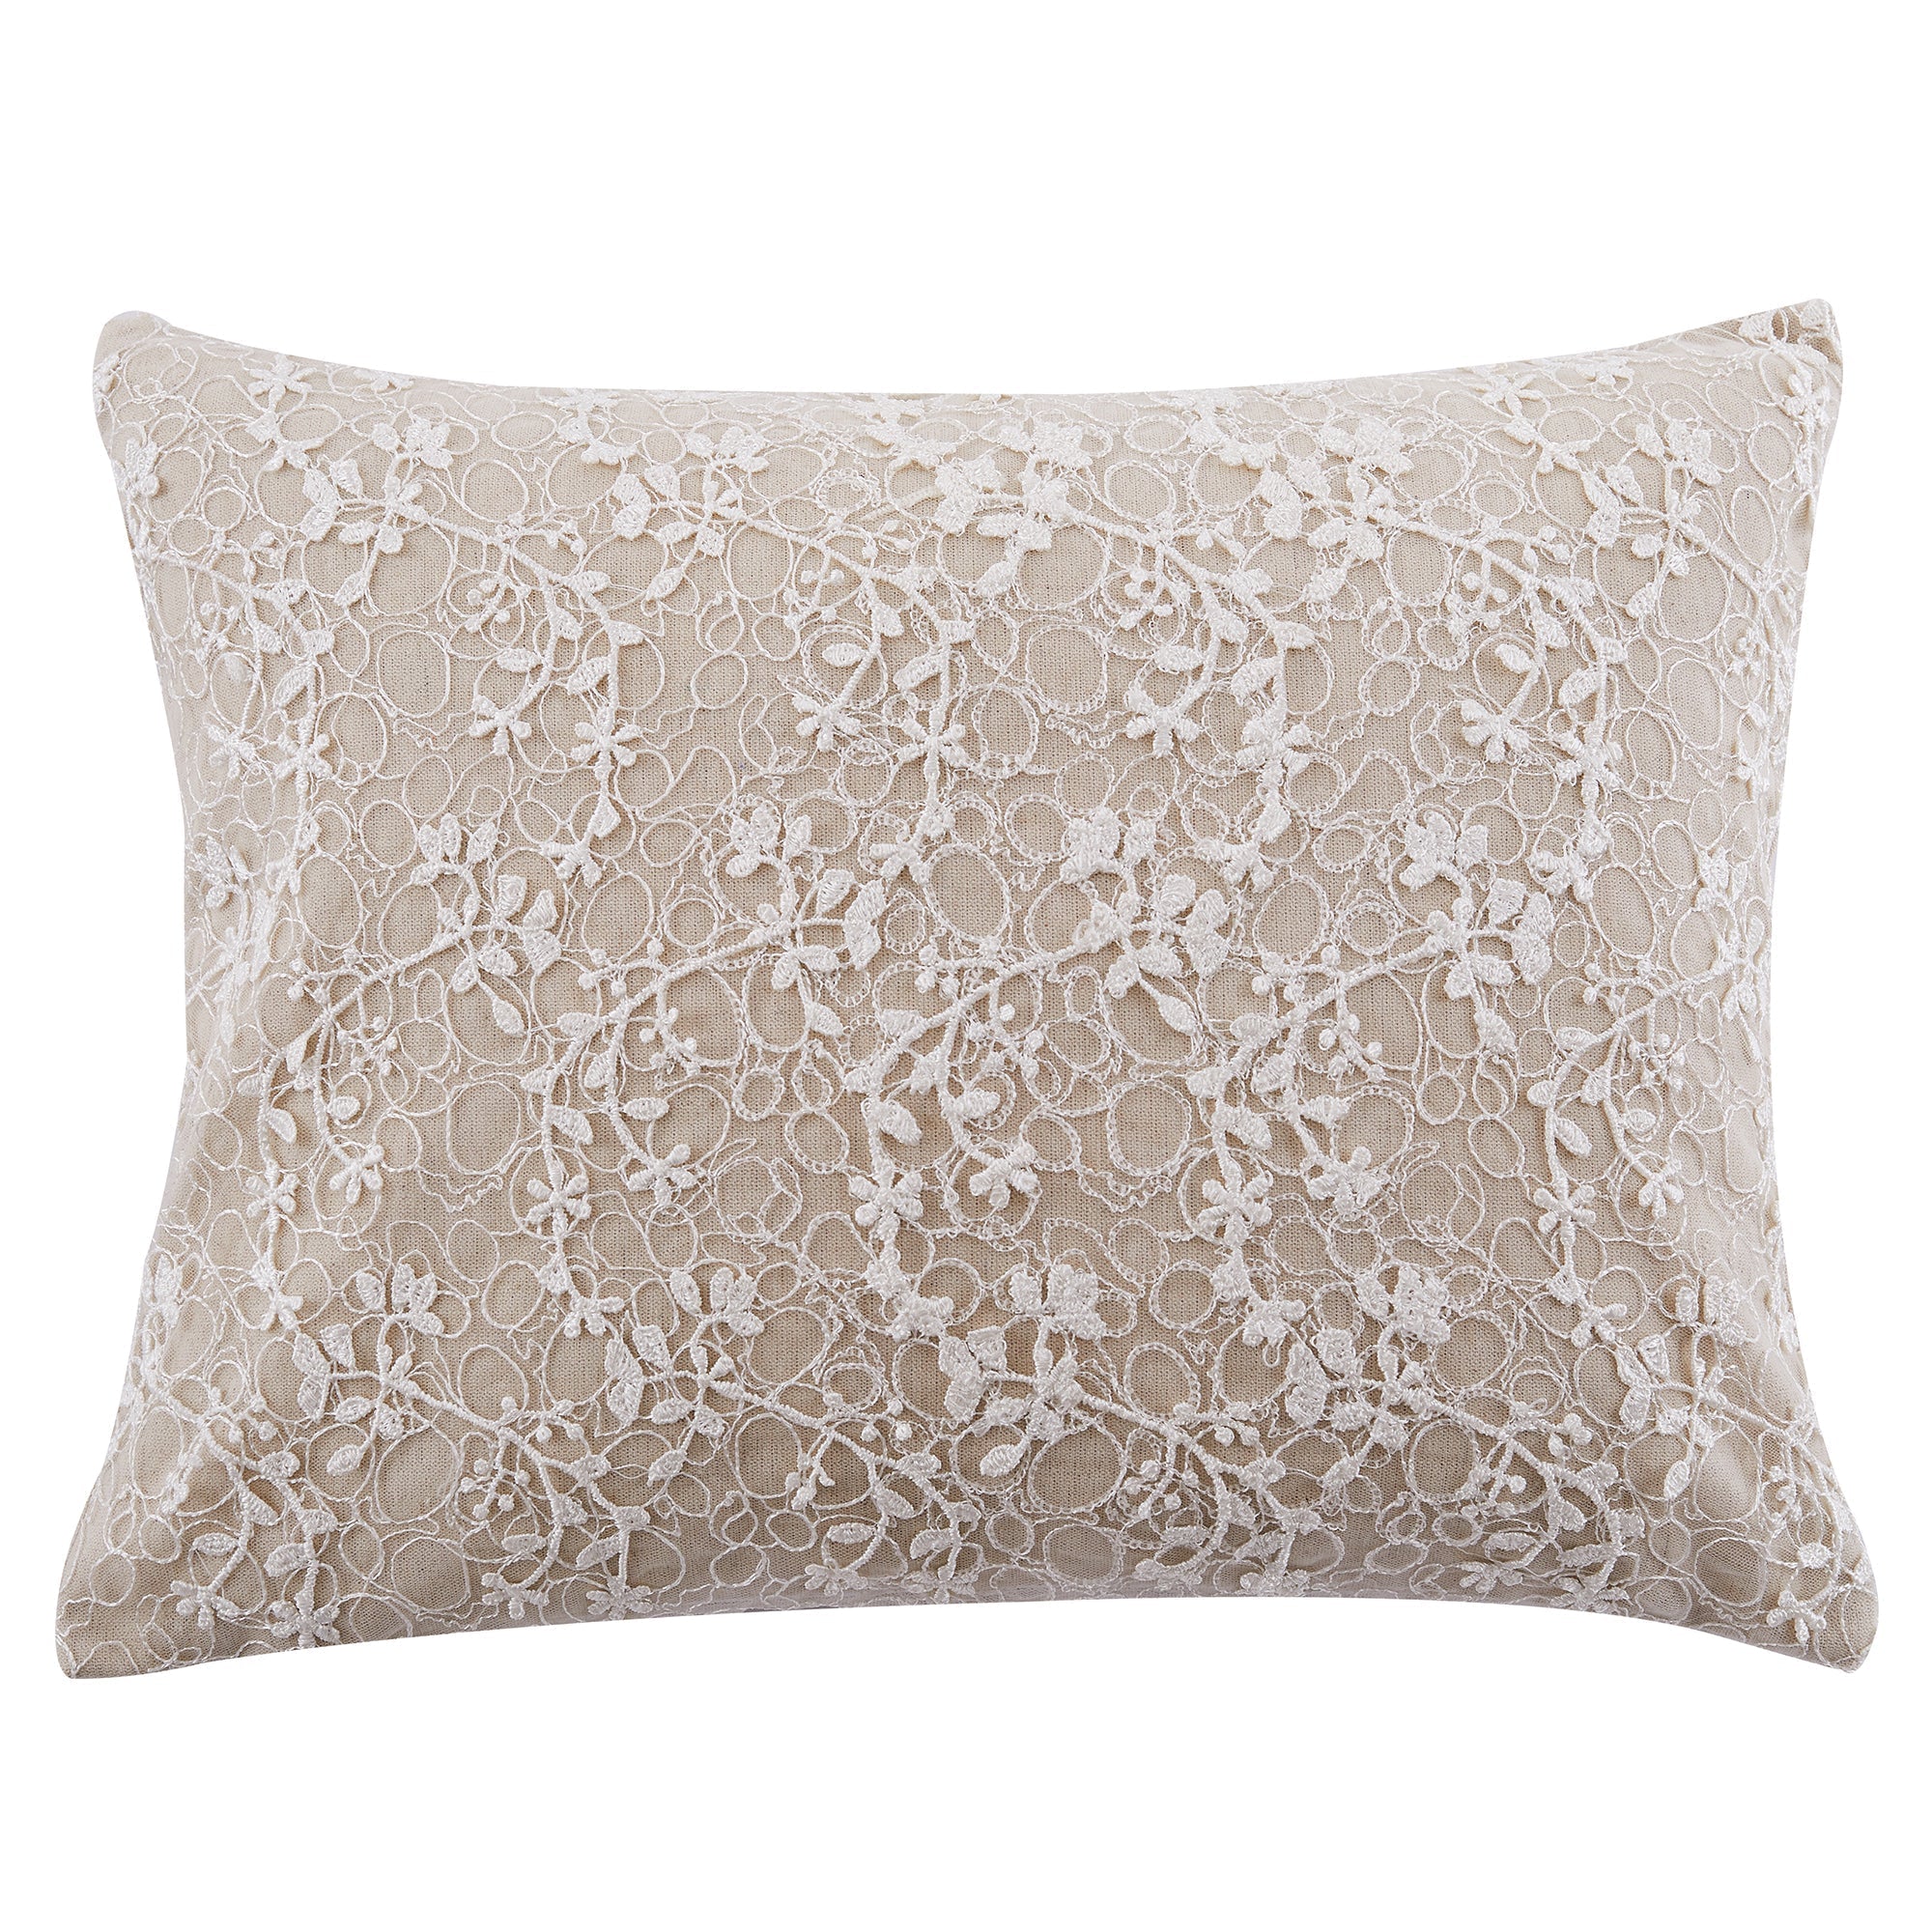 Sanira Taupe Lace Overlay Pillow